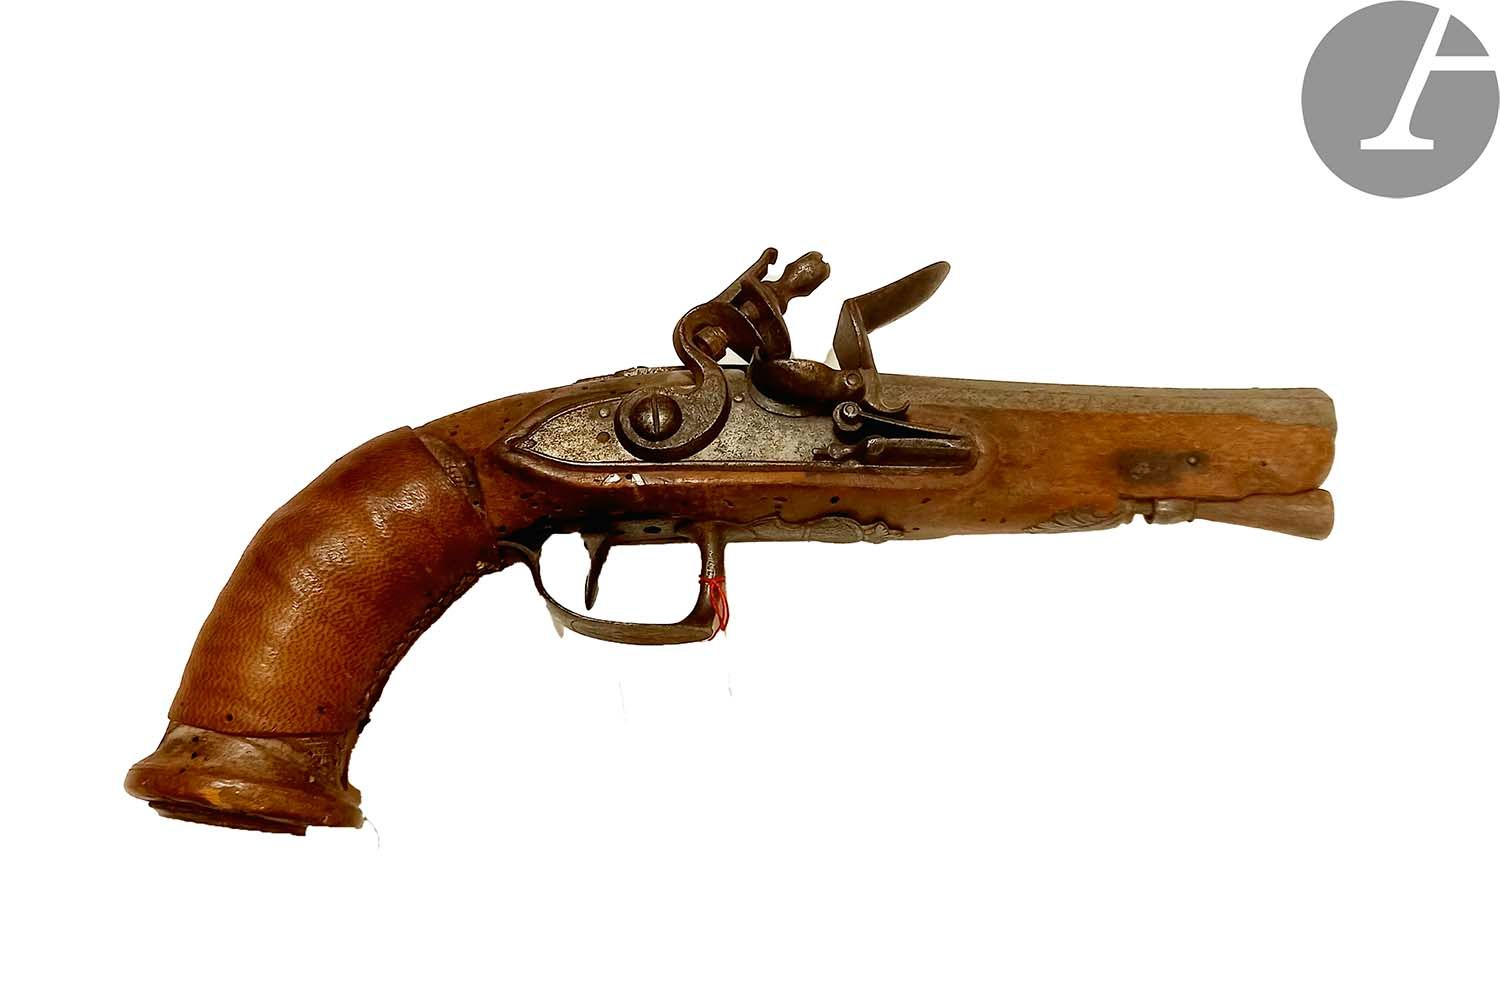 Null 燧发枪鞍座枪。
雷枪枪管。鹅颈锁和锤子有平坦的机身。切割和雕刻的铁配件。木制拉杆。胡桃木股票（被虫蛀的）。木制拉杆。
E.M. 大约1800/1820&hellip;